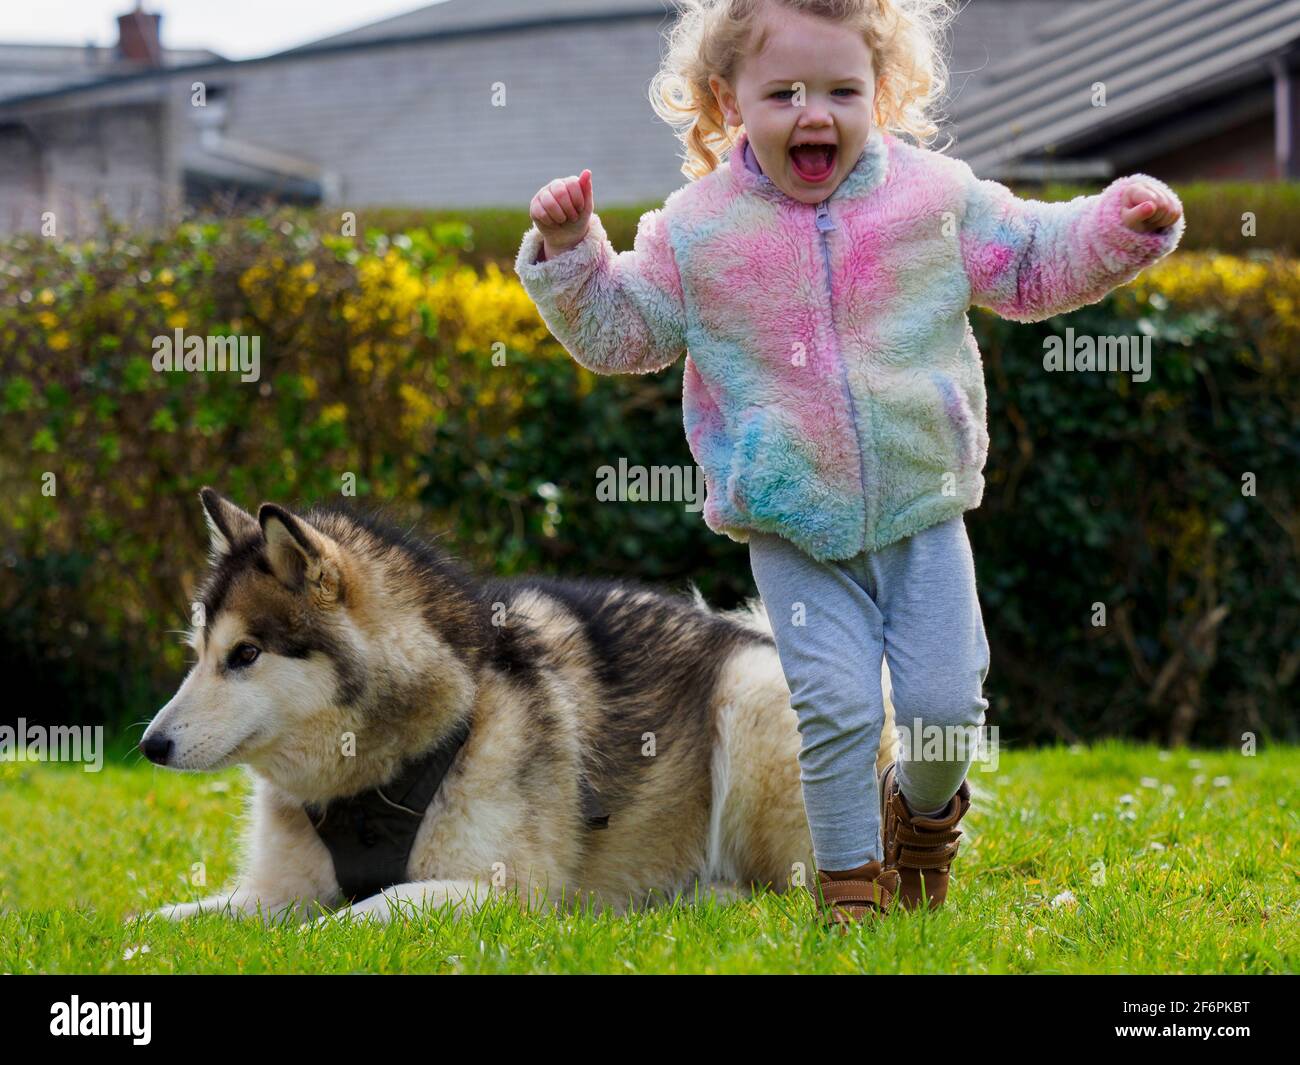 Toddler and pet dog playing in garden, UK Stock Photo